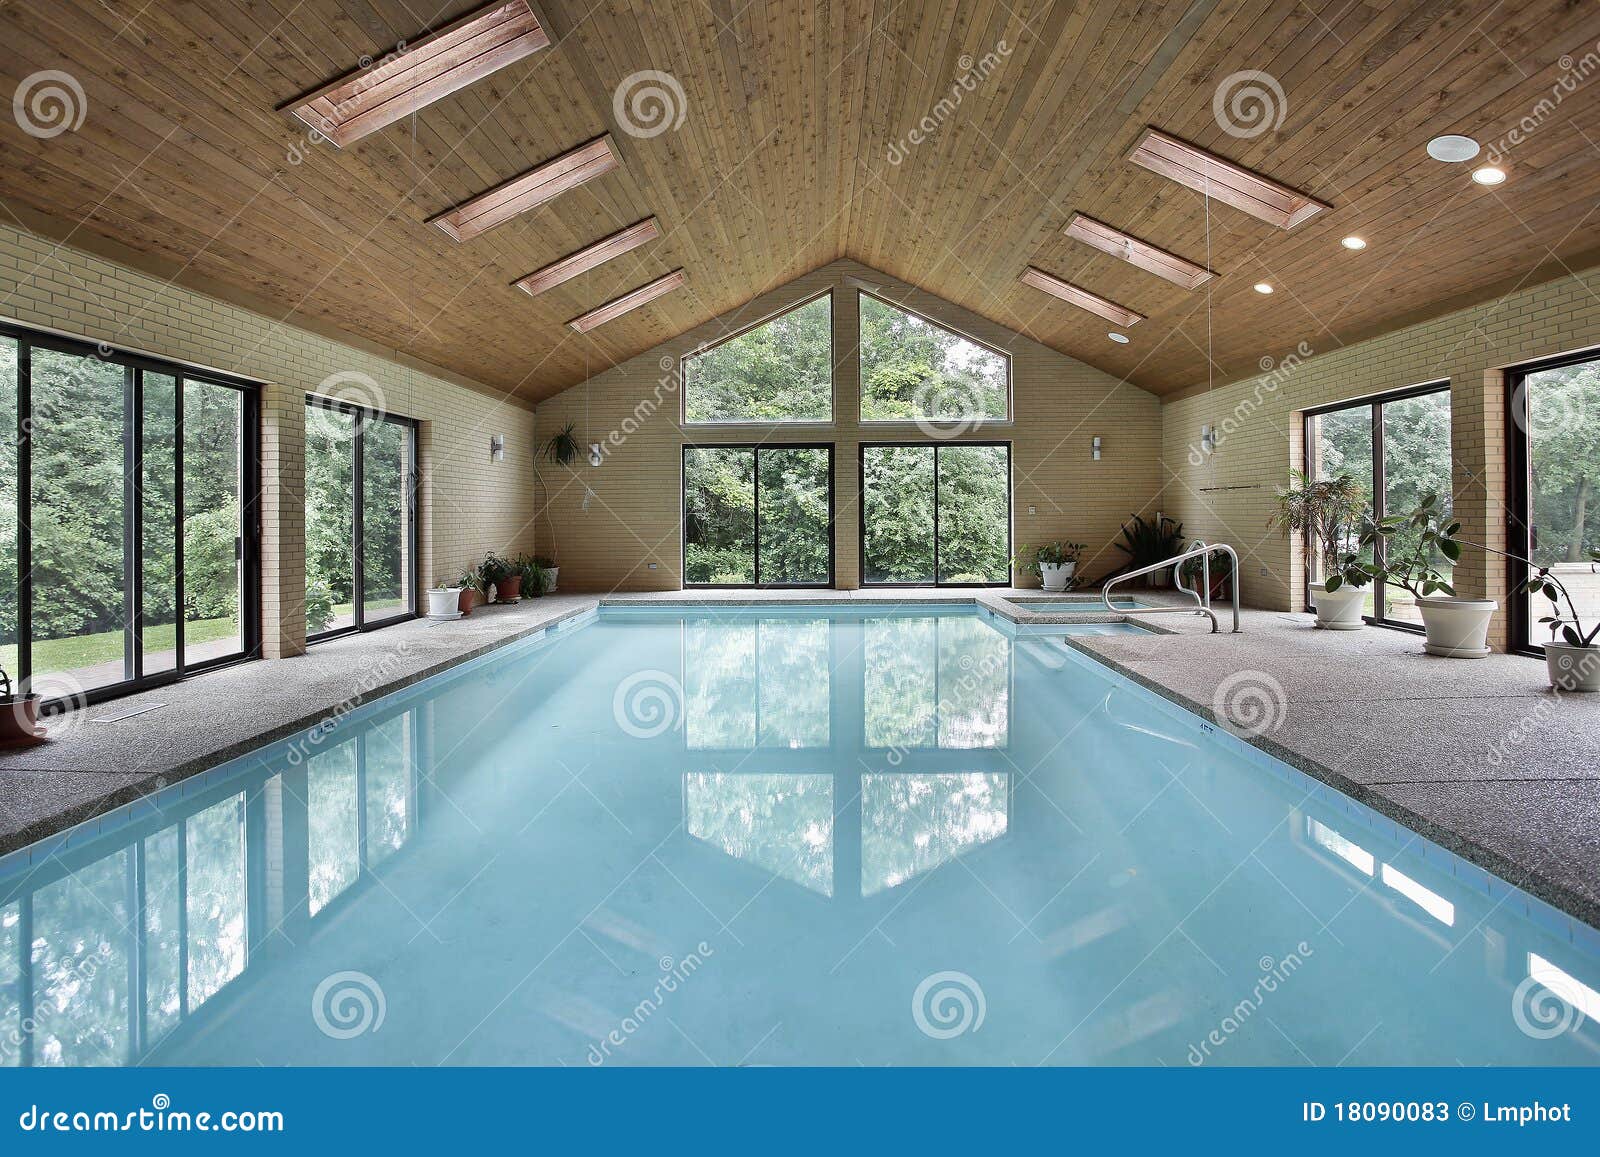 indoor pool with skylights